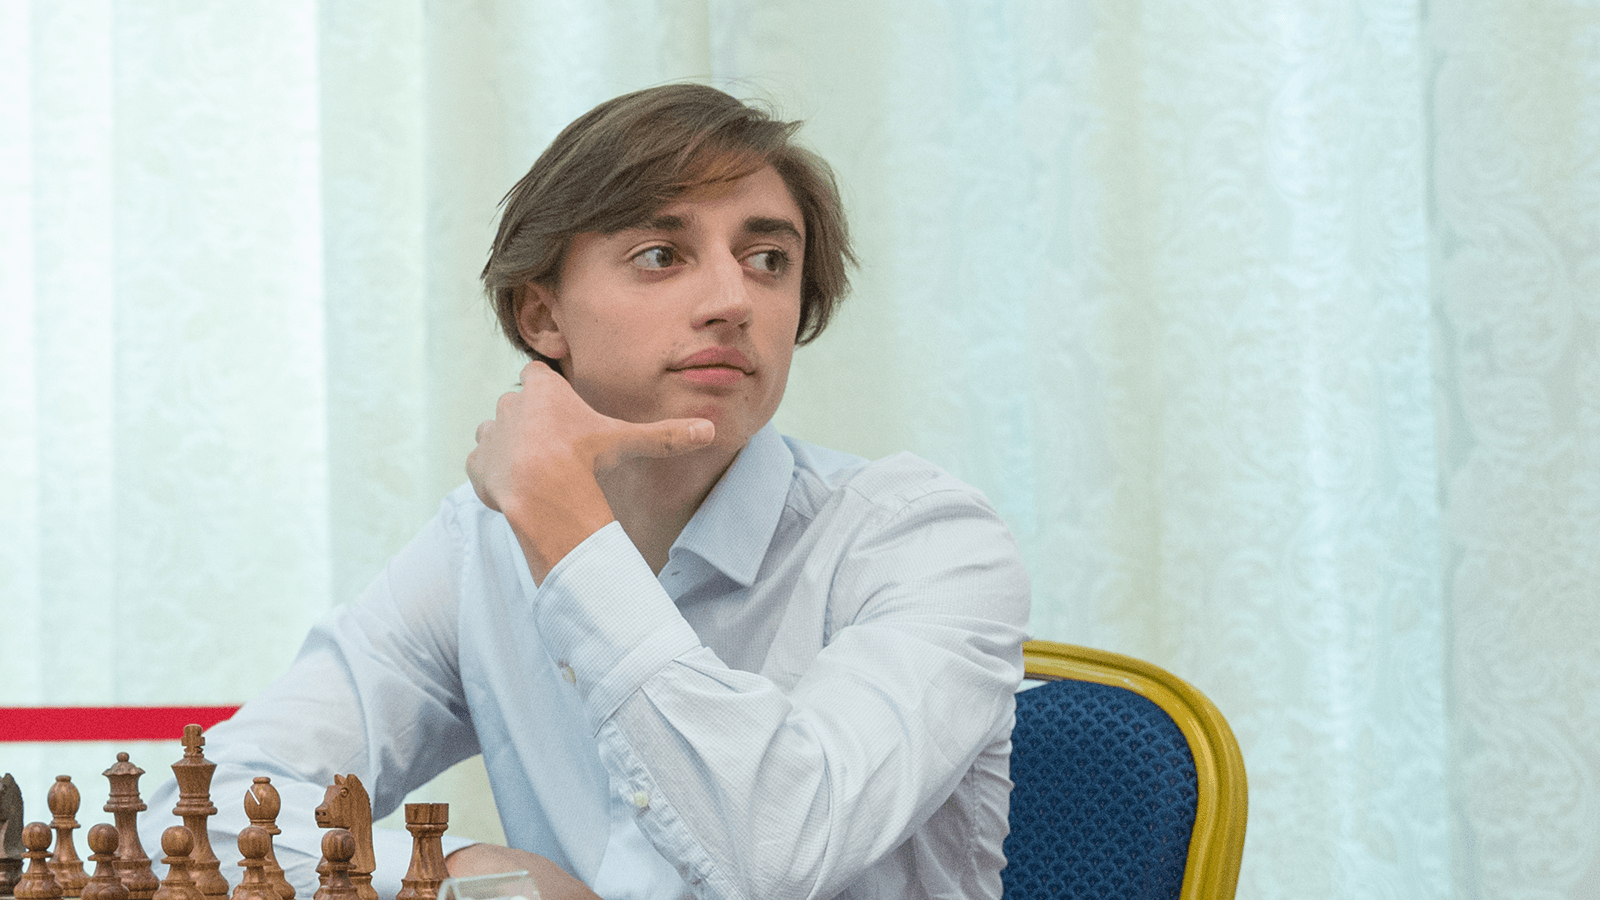 Daniil Dubov - Post Round 2 interview 